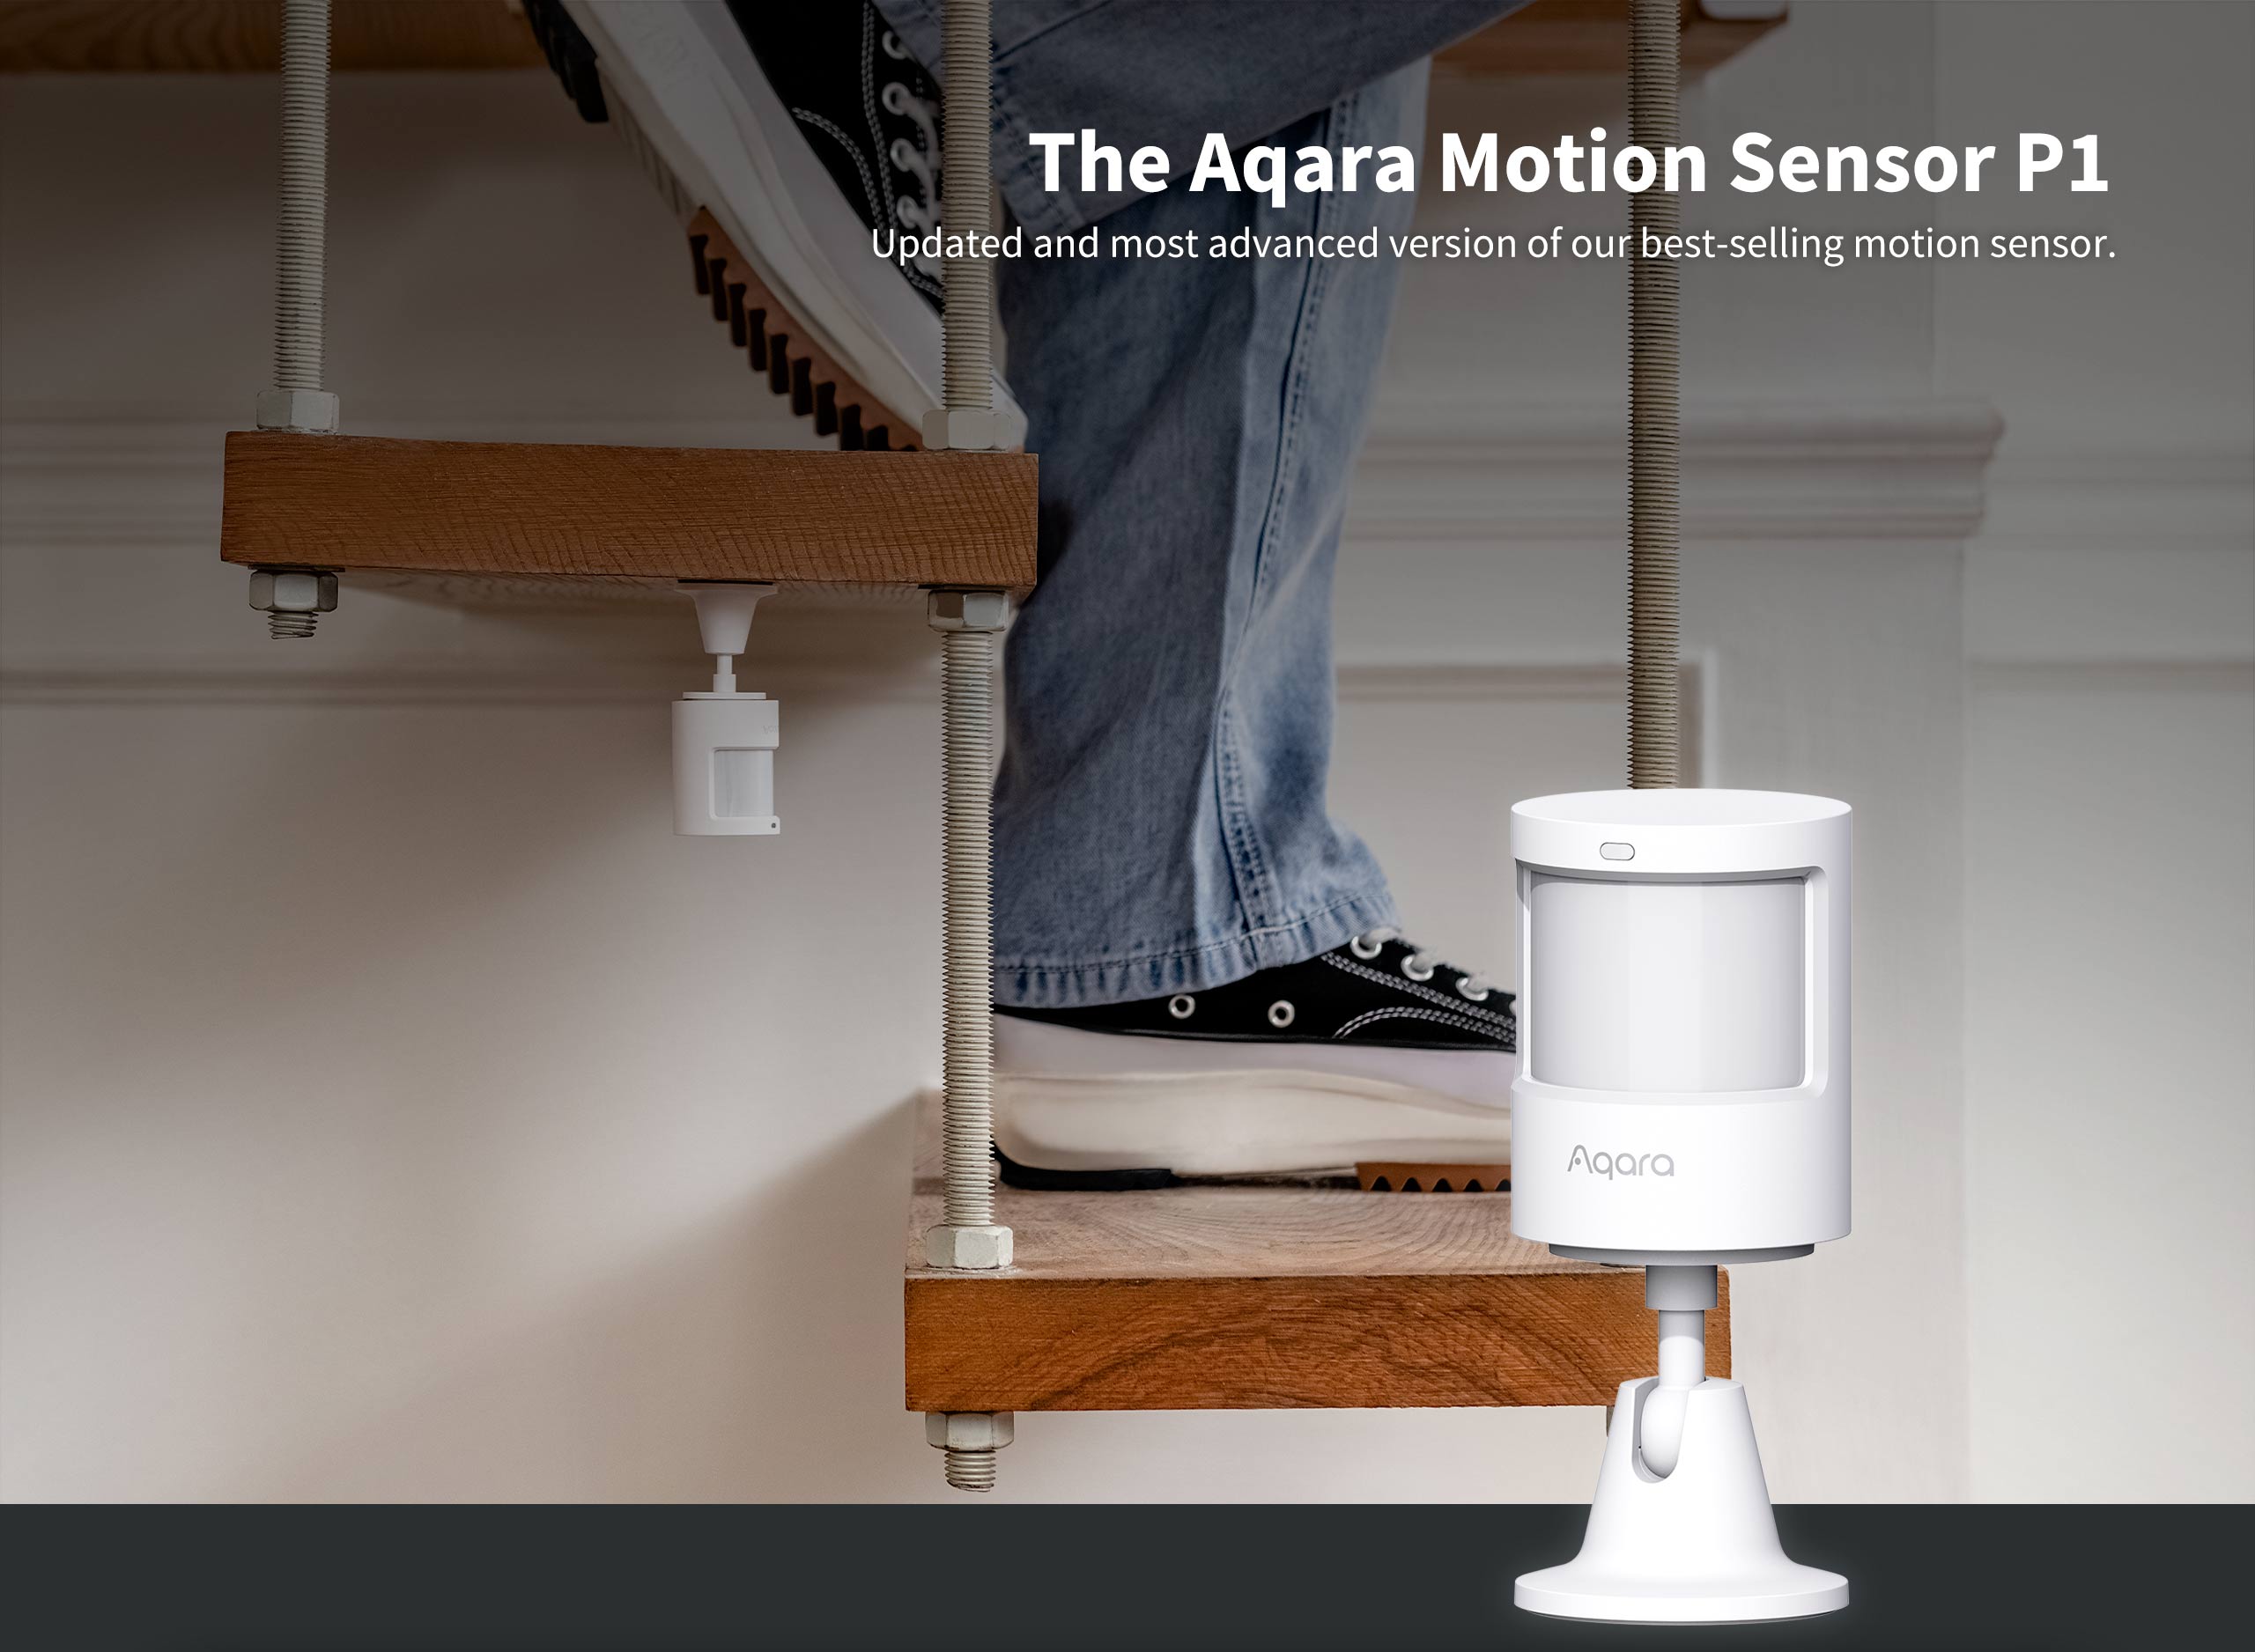 Motion Sensor P1 pc 01 Aqara Motion Sensor, REQUIRES AQARA HUB, Zigbee Connection, for Alarm System and Smart Home Automation